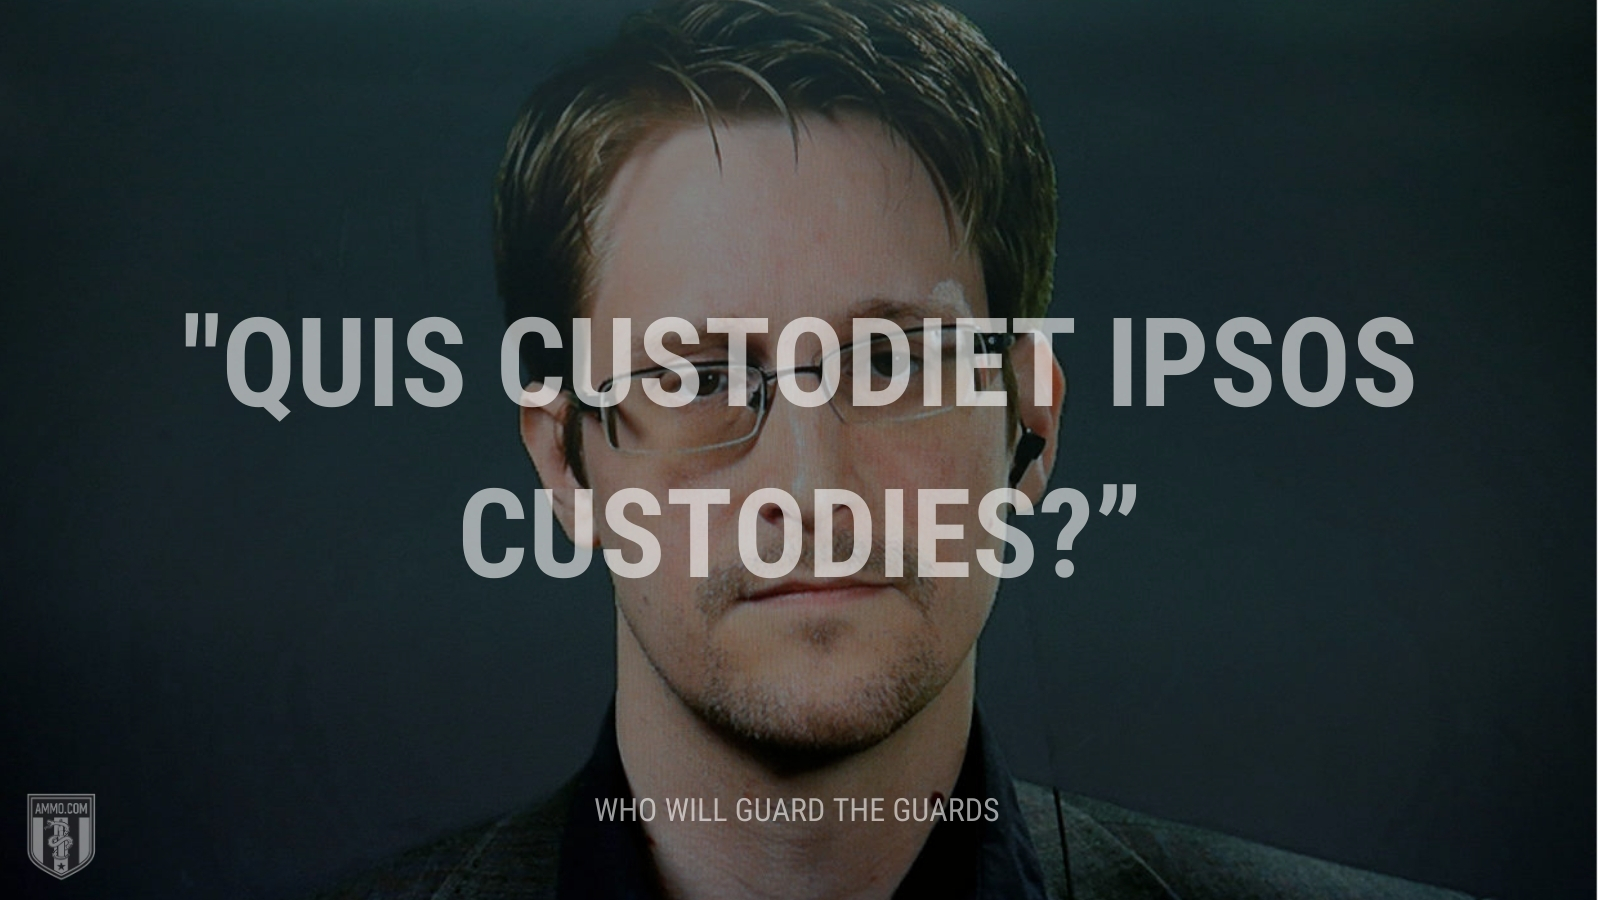 “Quis custodiet ipsos custodies?” - Who will guard the guards